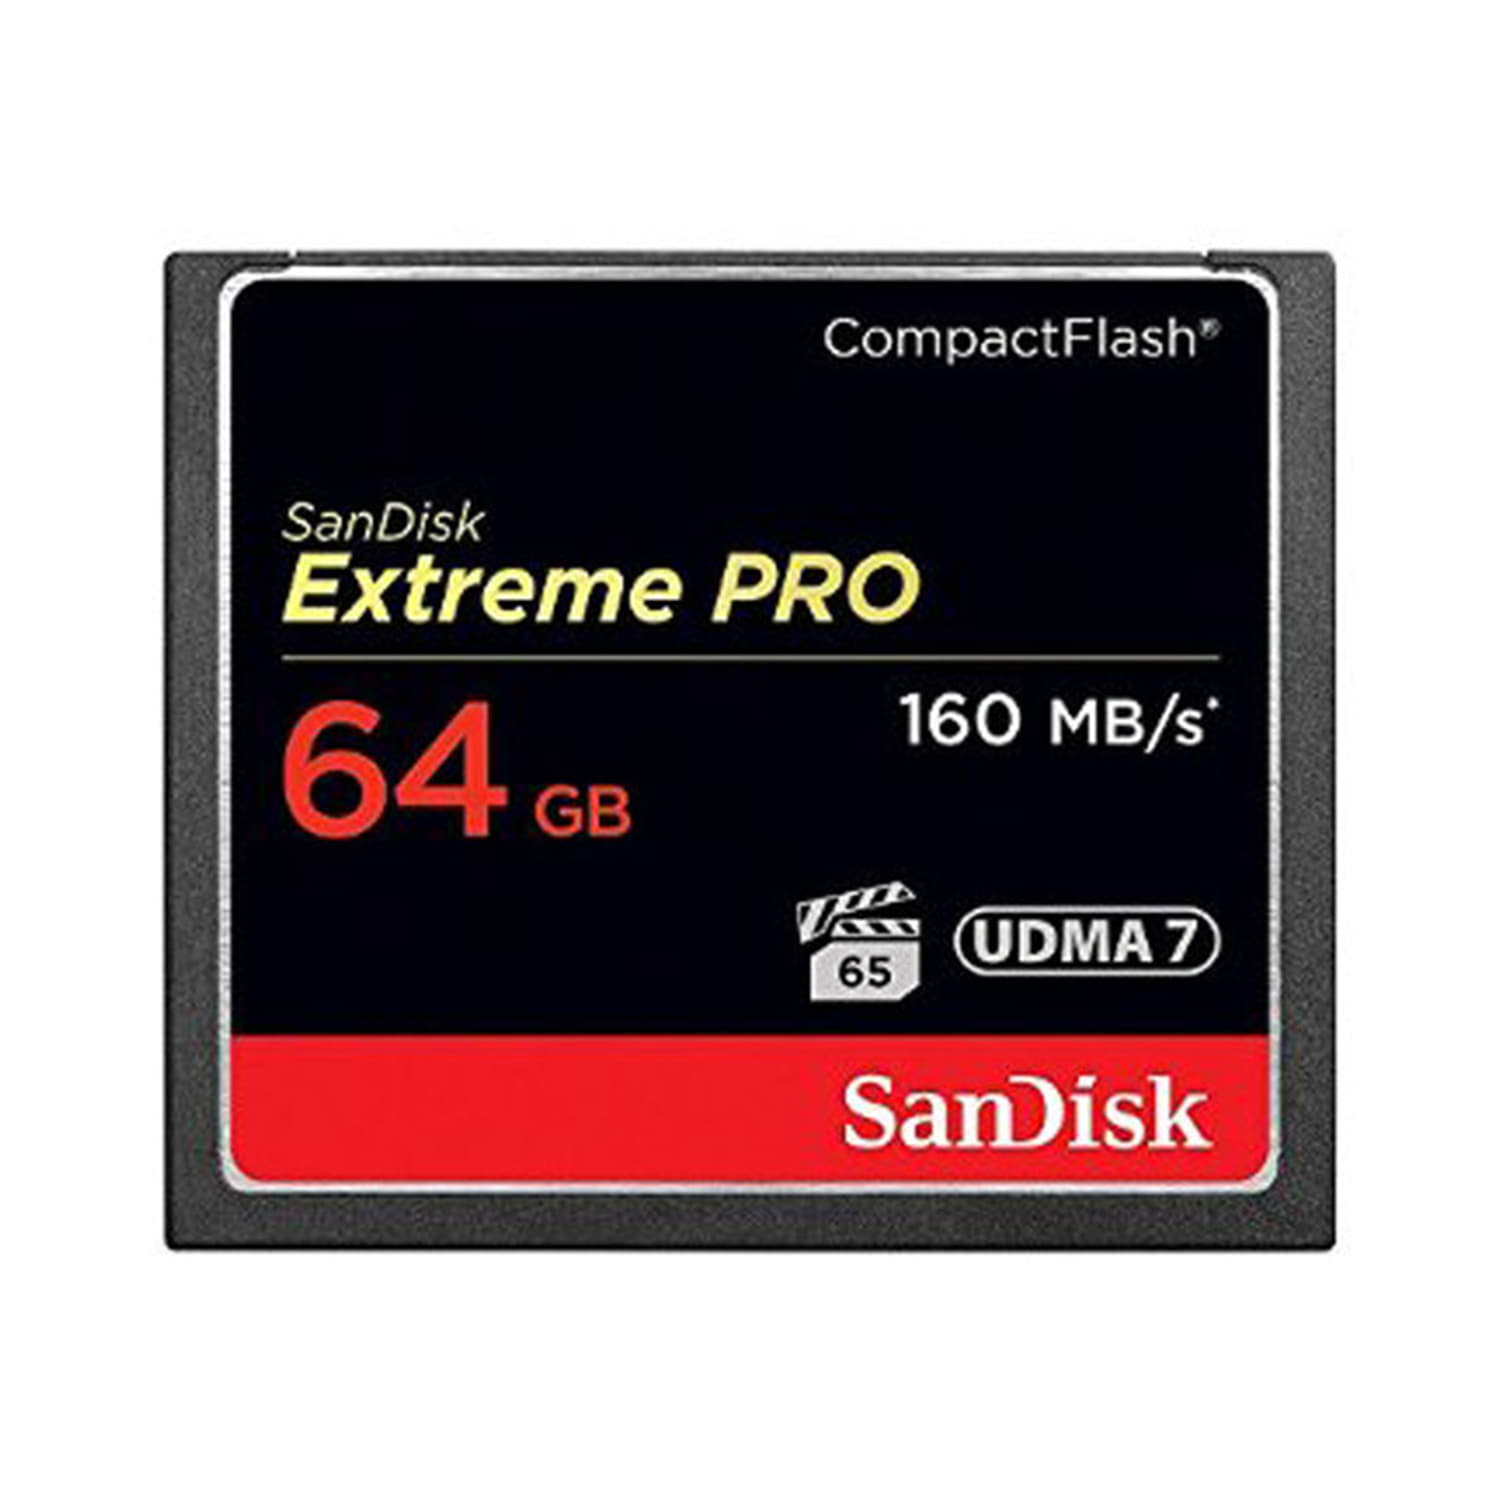 Sandisk CF UDMA 7 Extreme Pro (64GB)